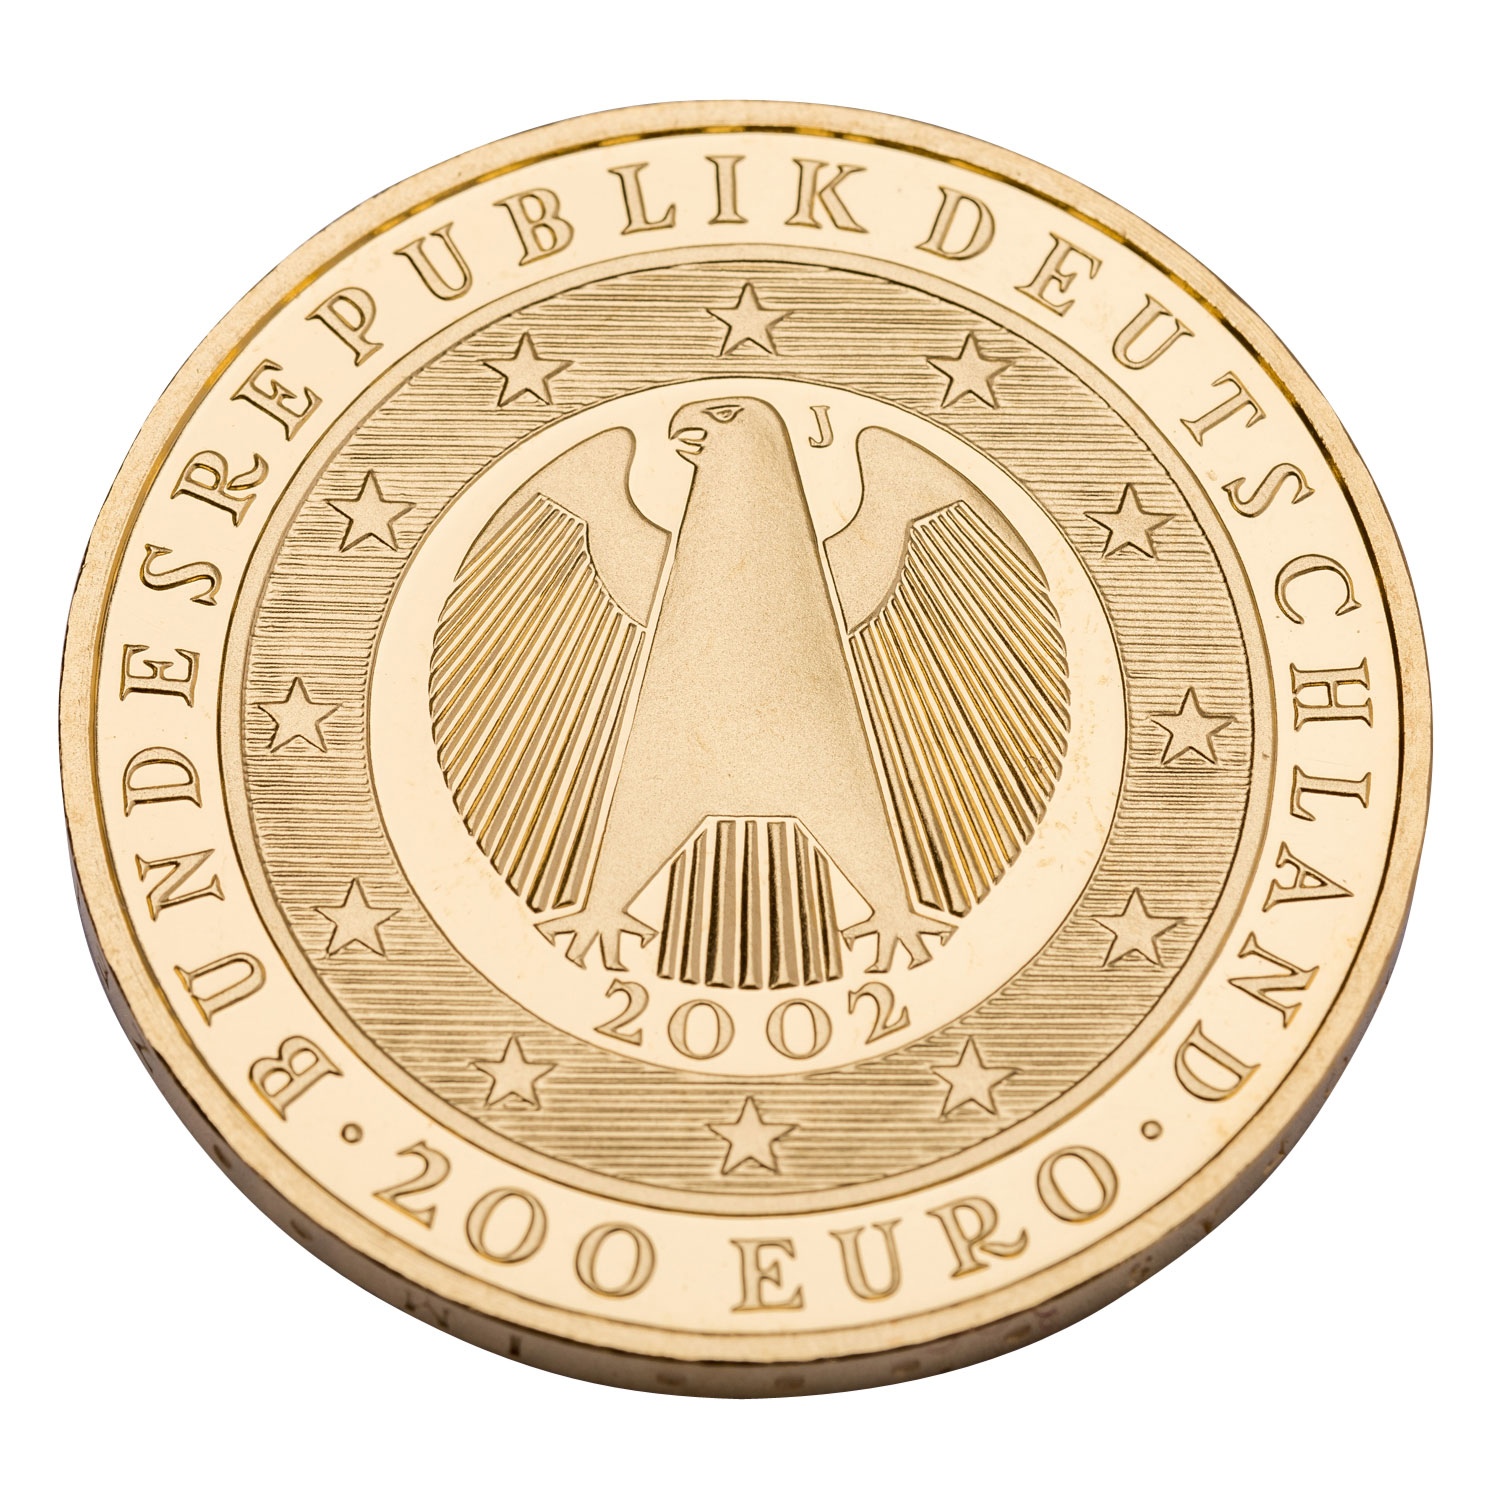 BRD - 200 Euro 2002/J, Währungsunion, GOLD, - Image 2 of 3